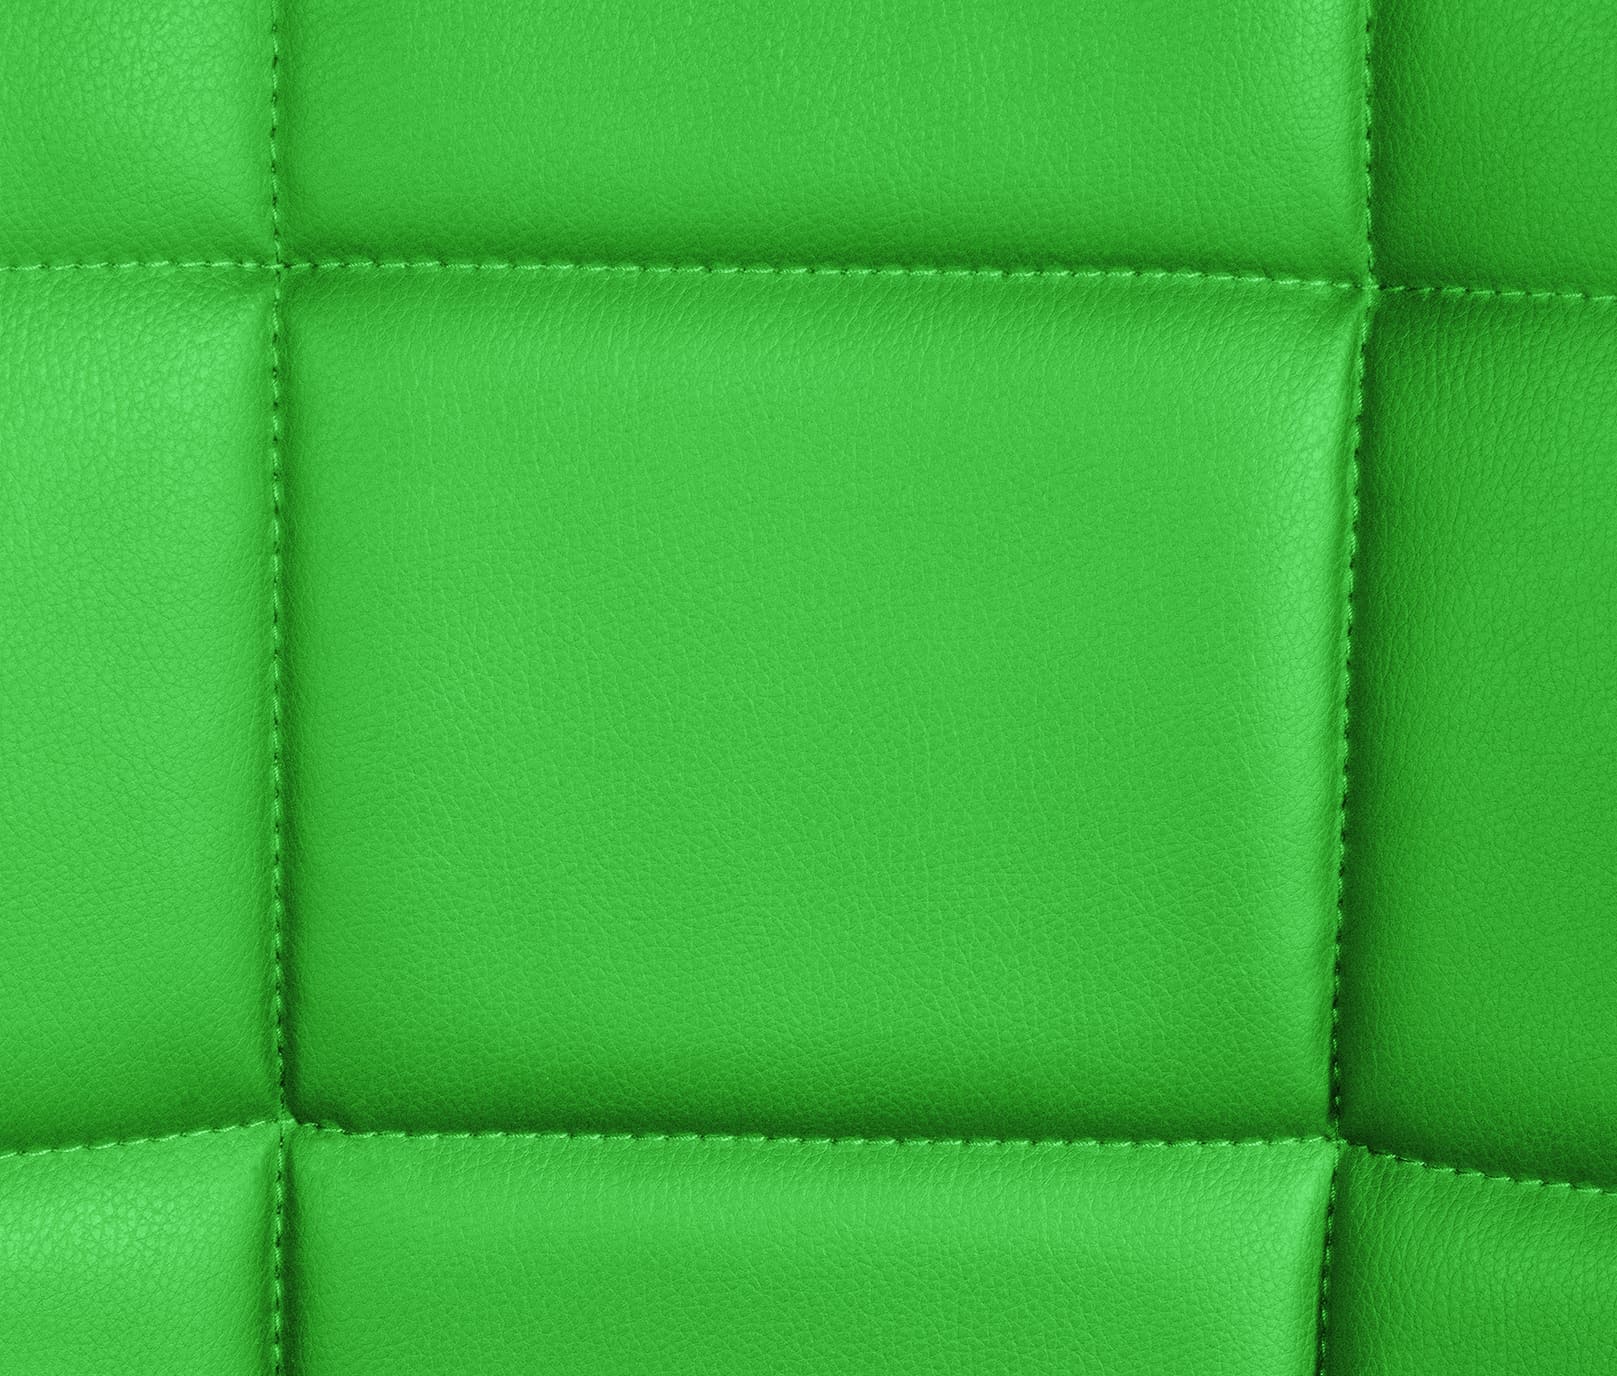 2er Set Stuhl Tom grün Kunstleder